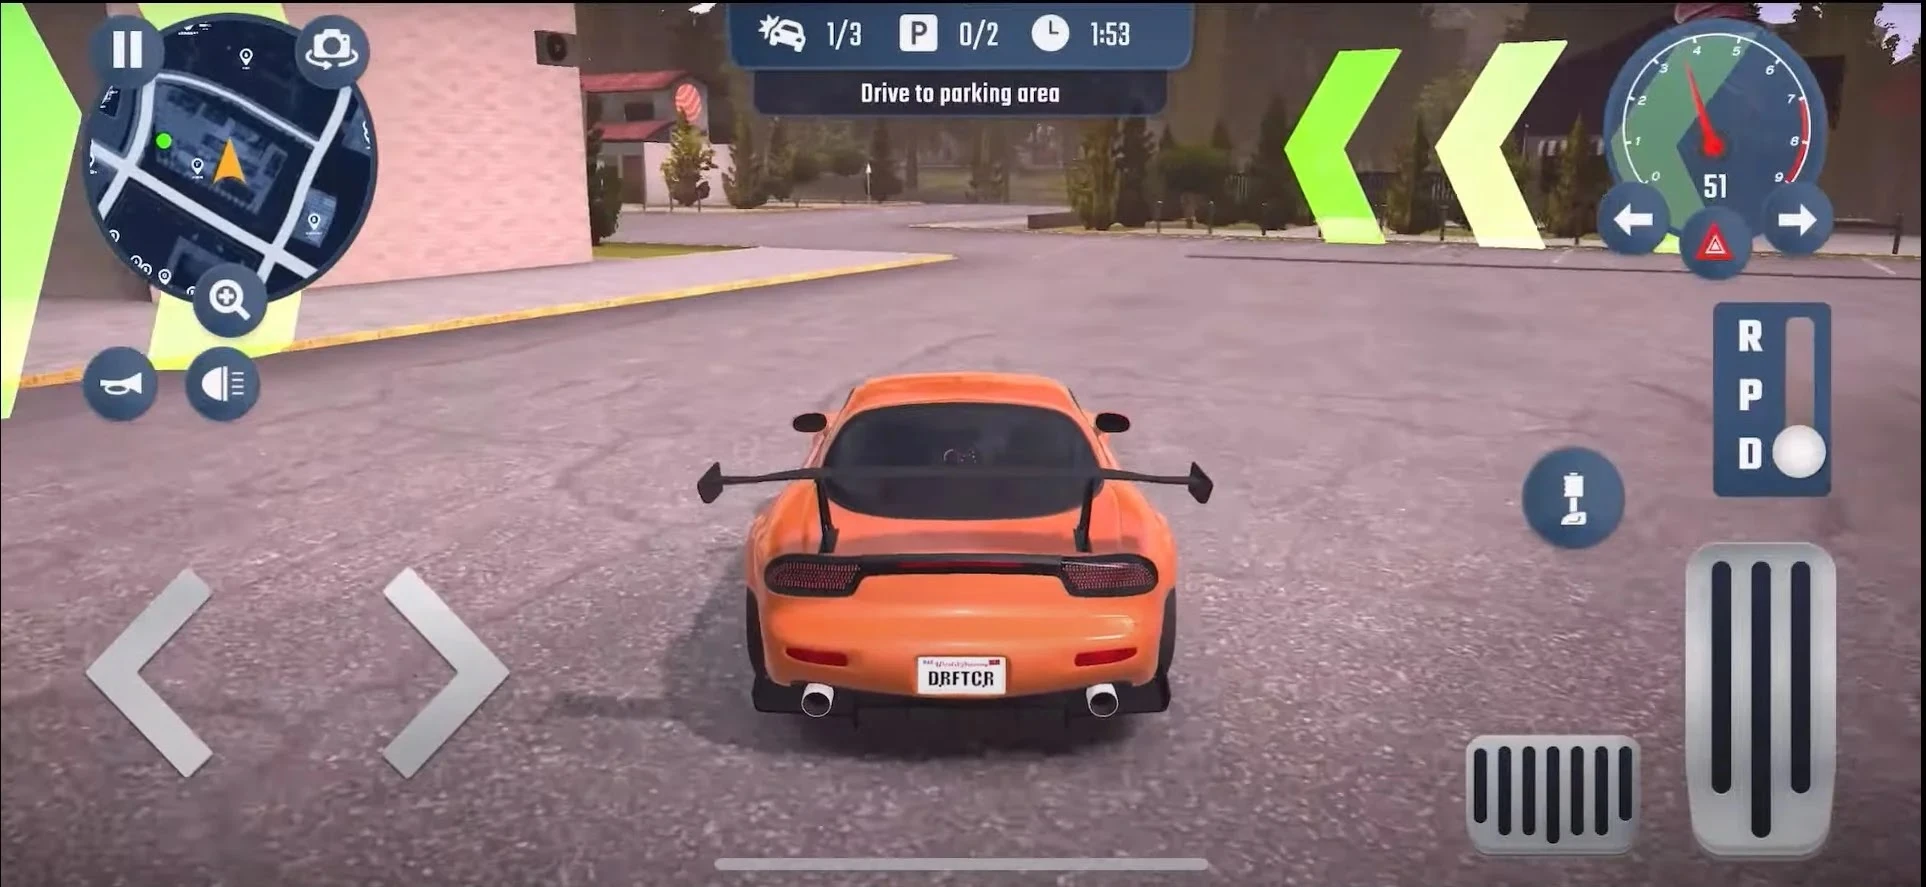 Parking Master Multiplayer 2 Mod Apk Unlimited Money